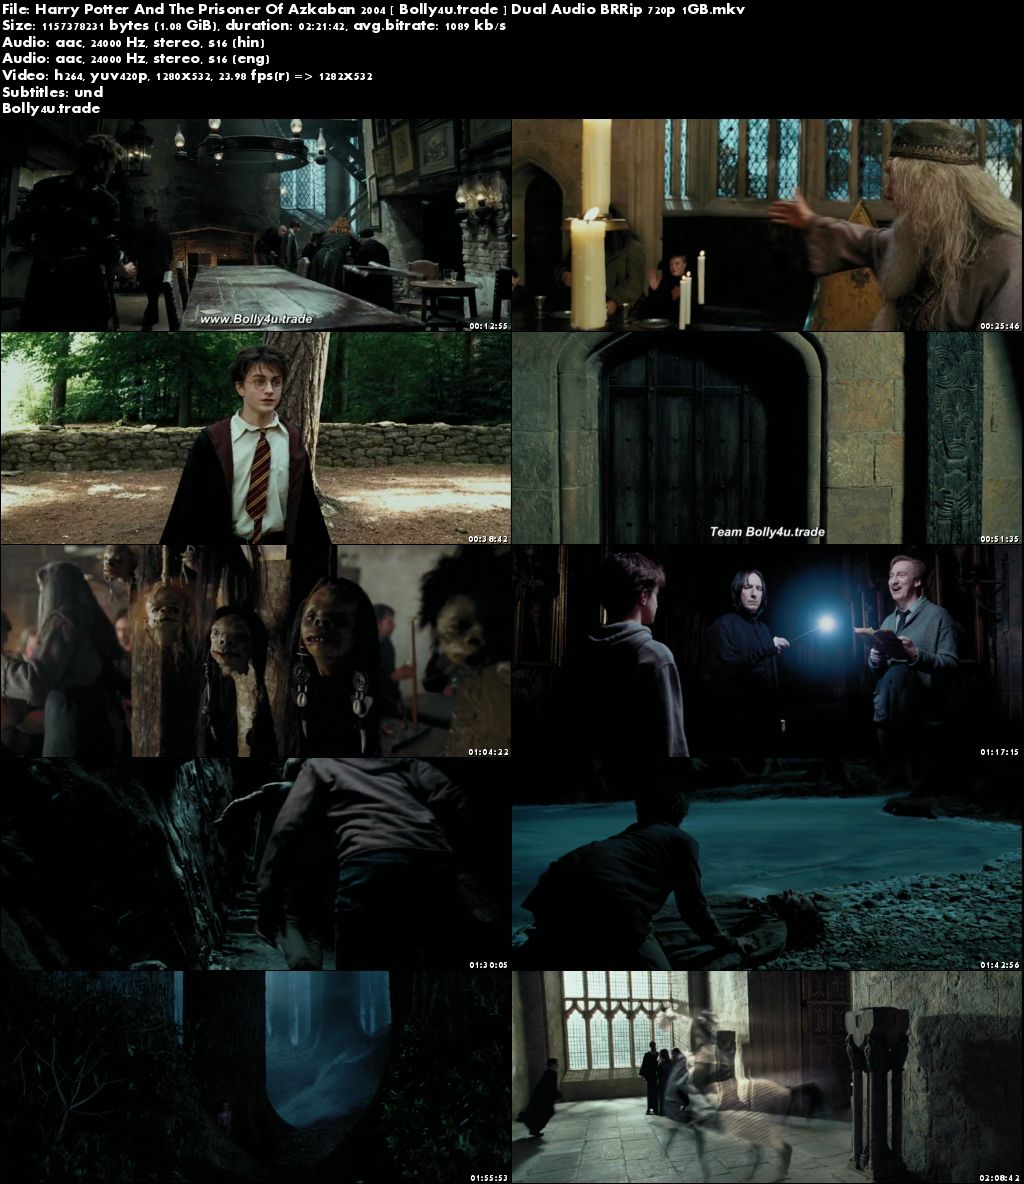 Harry Potter And The Prisoner Of Azkaban 2004 BRRip 450MB Hindi Dual Audio 480p Download